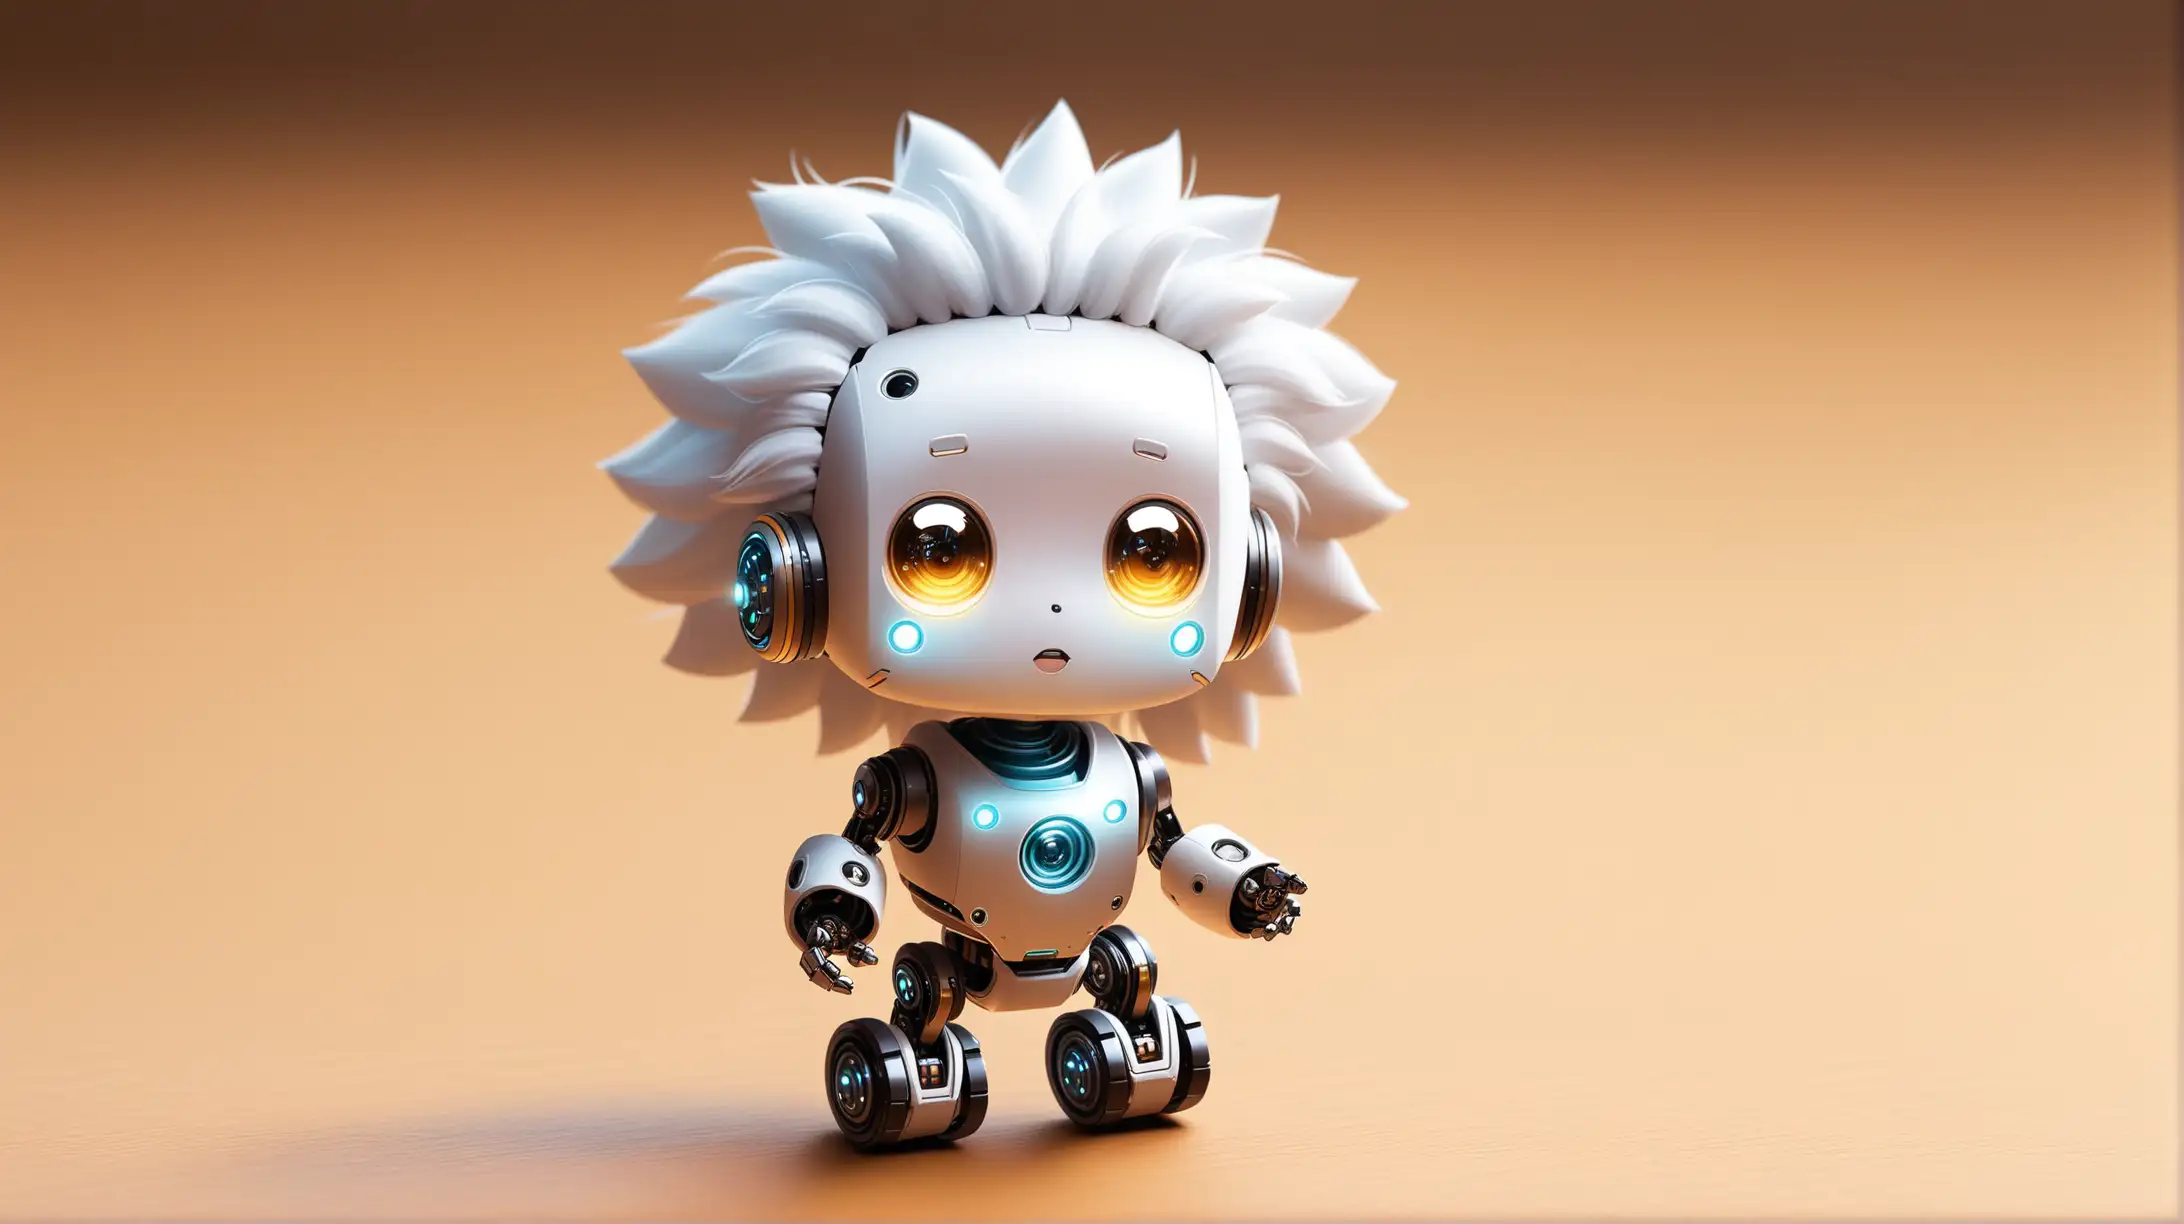 Adorable Tiny Robot Resembling Einstein